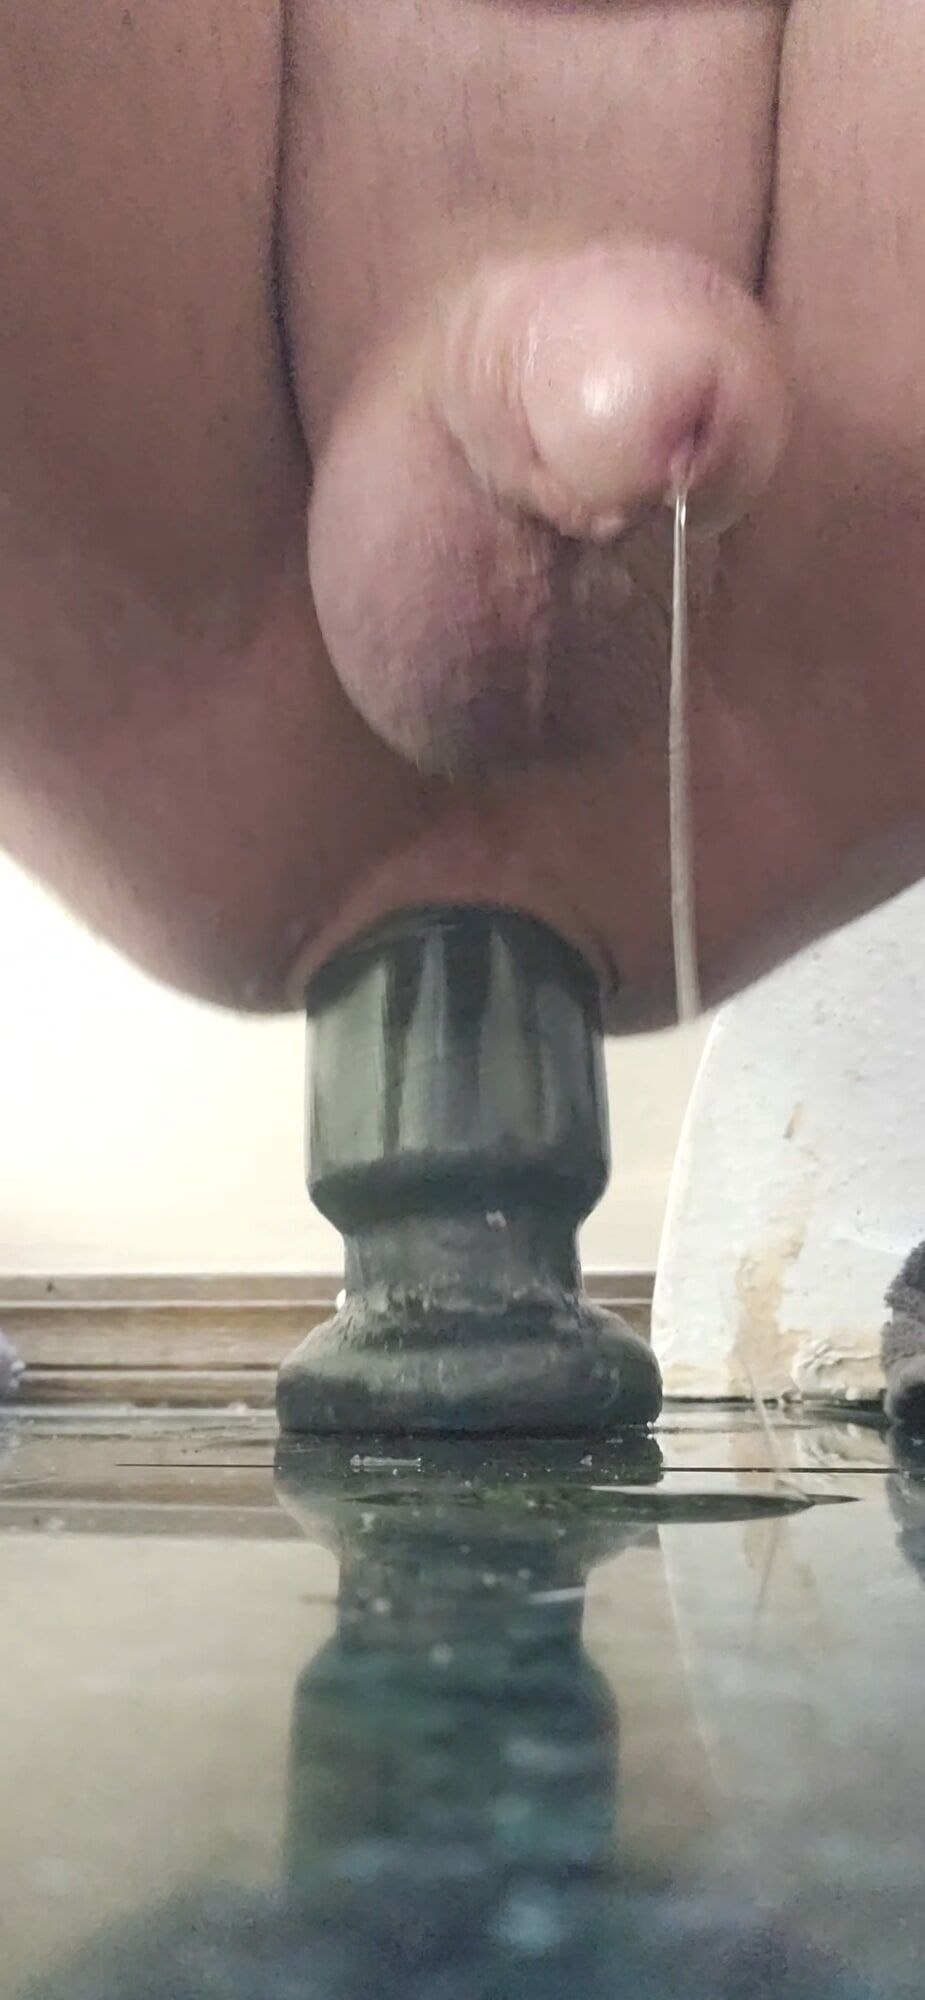 Presume dripping cock huge anal plug